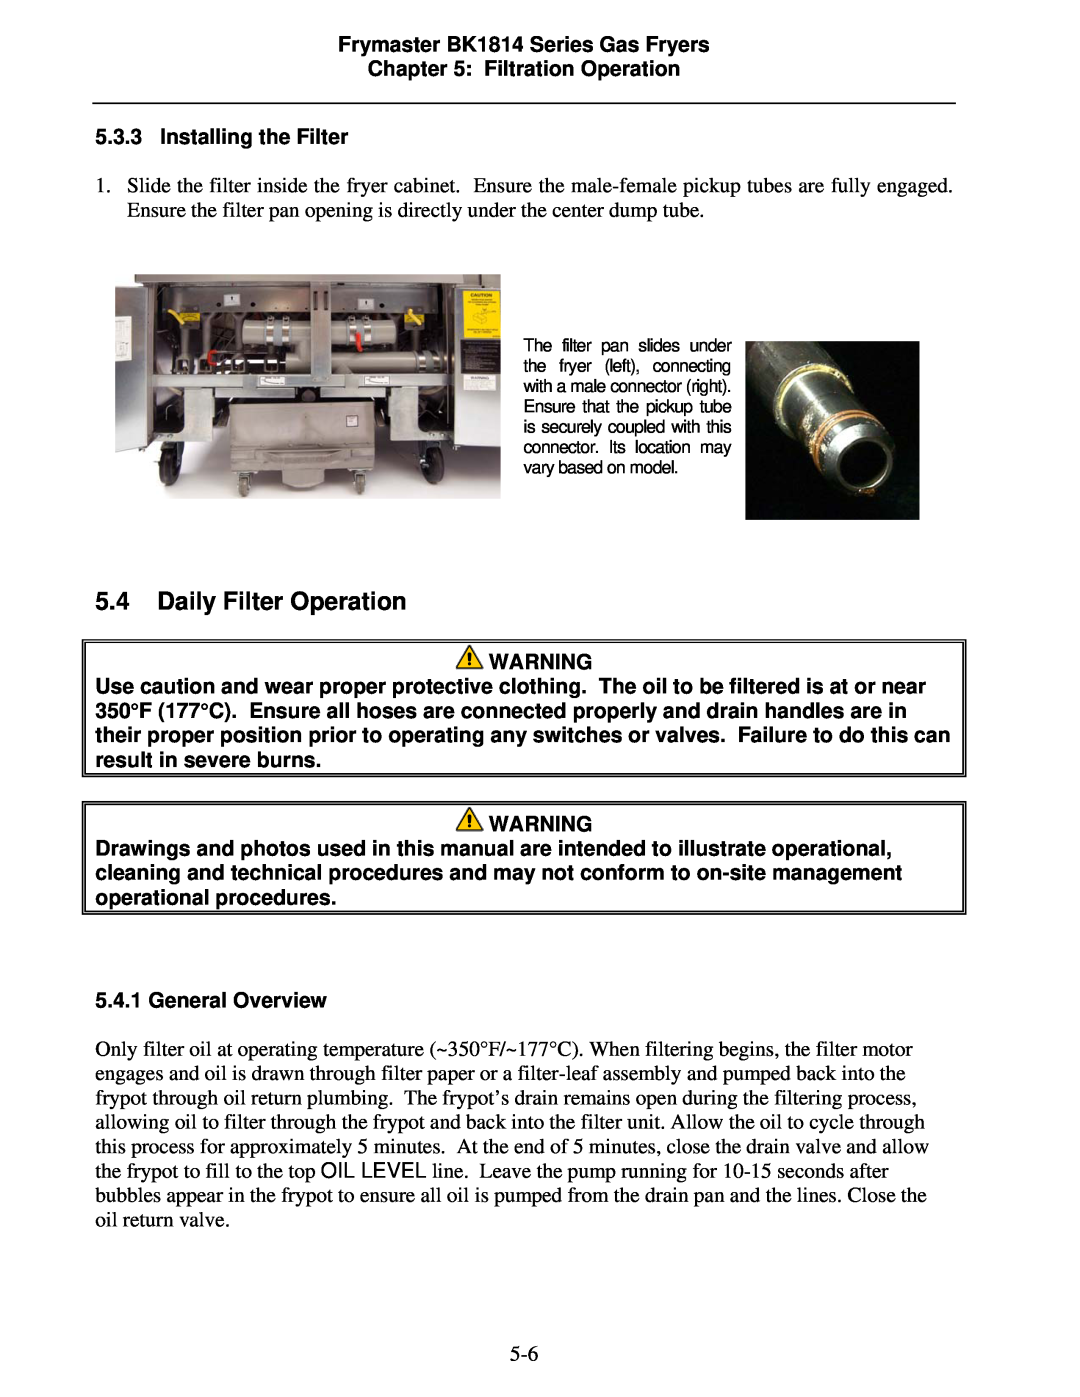 Frymaster BK1814 operation manual Daily Filter Operation 